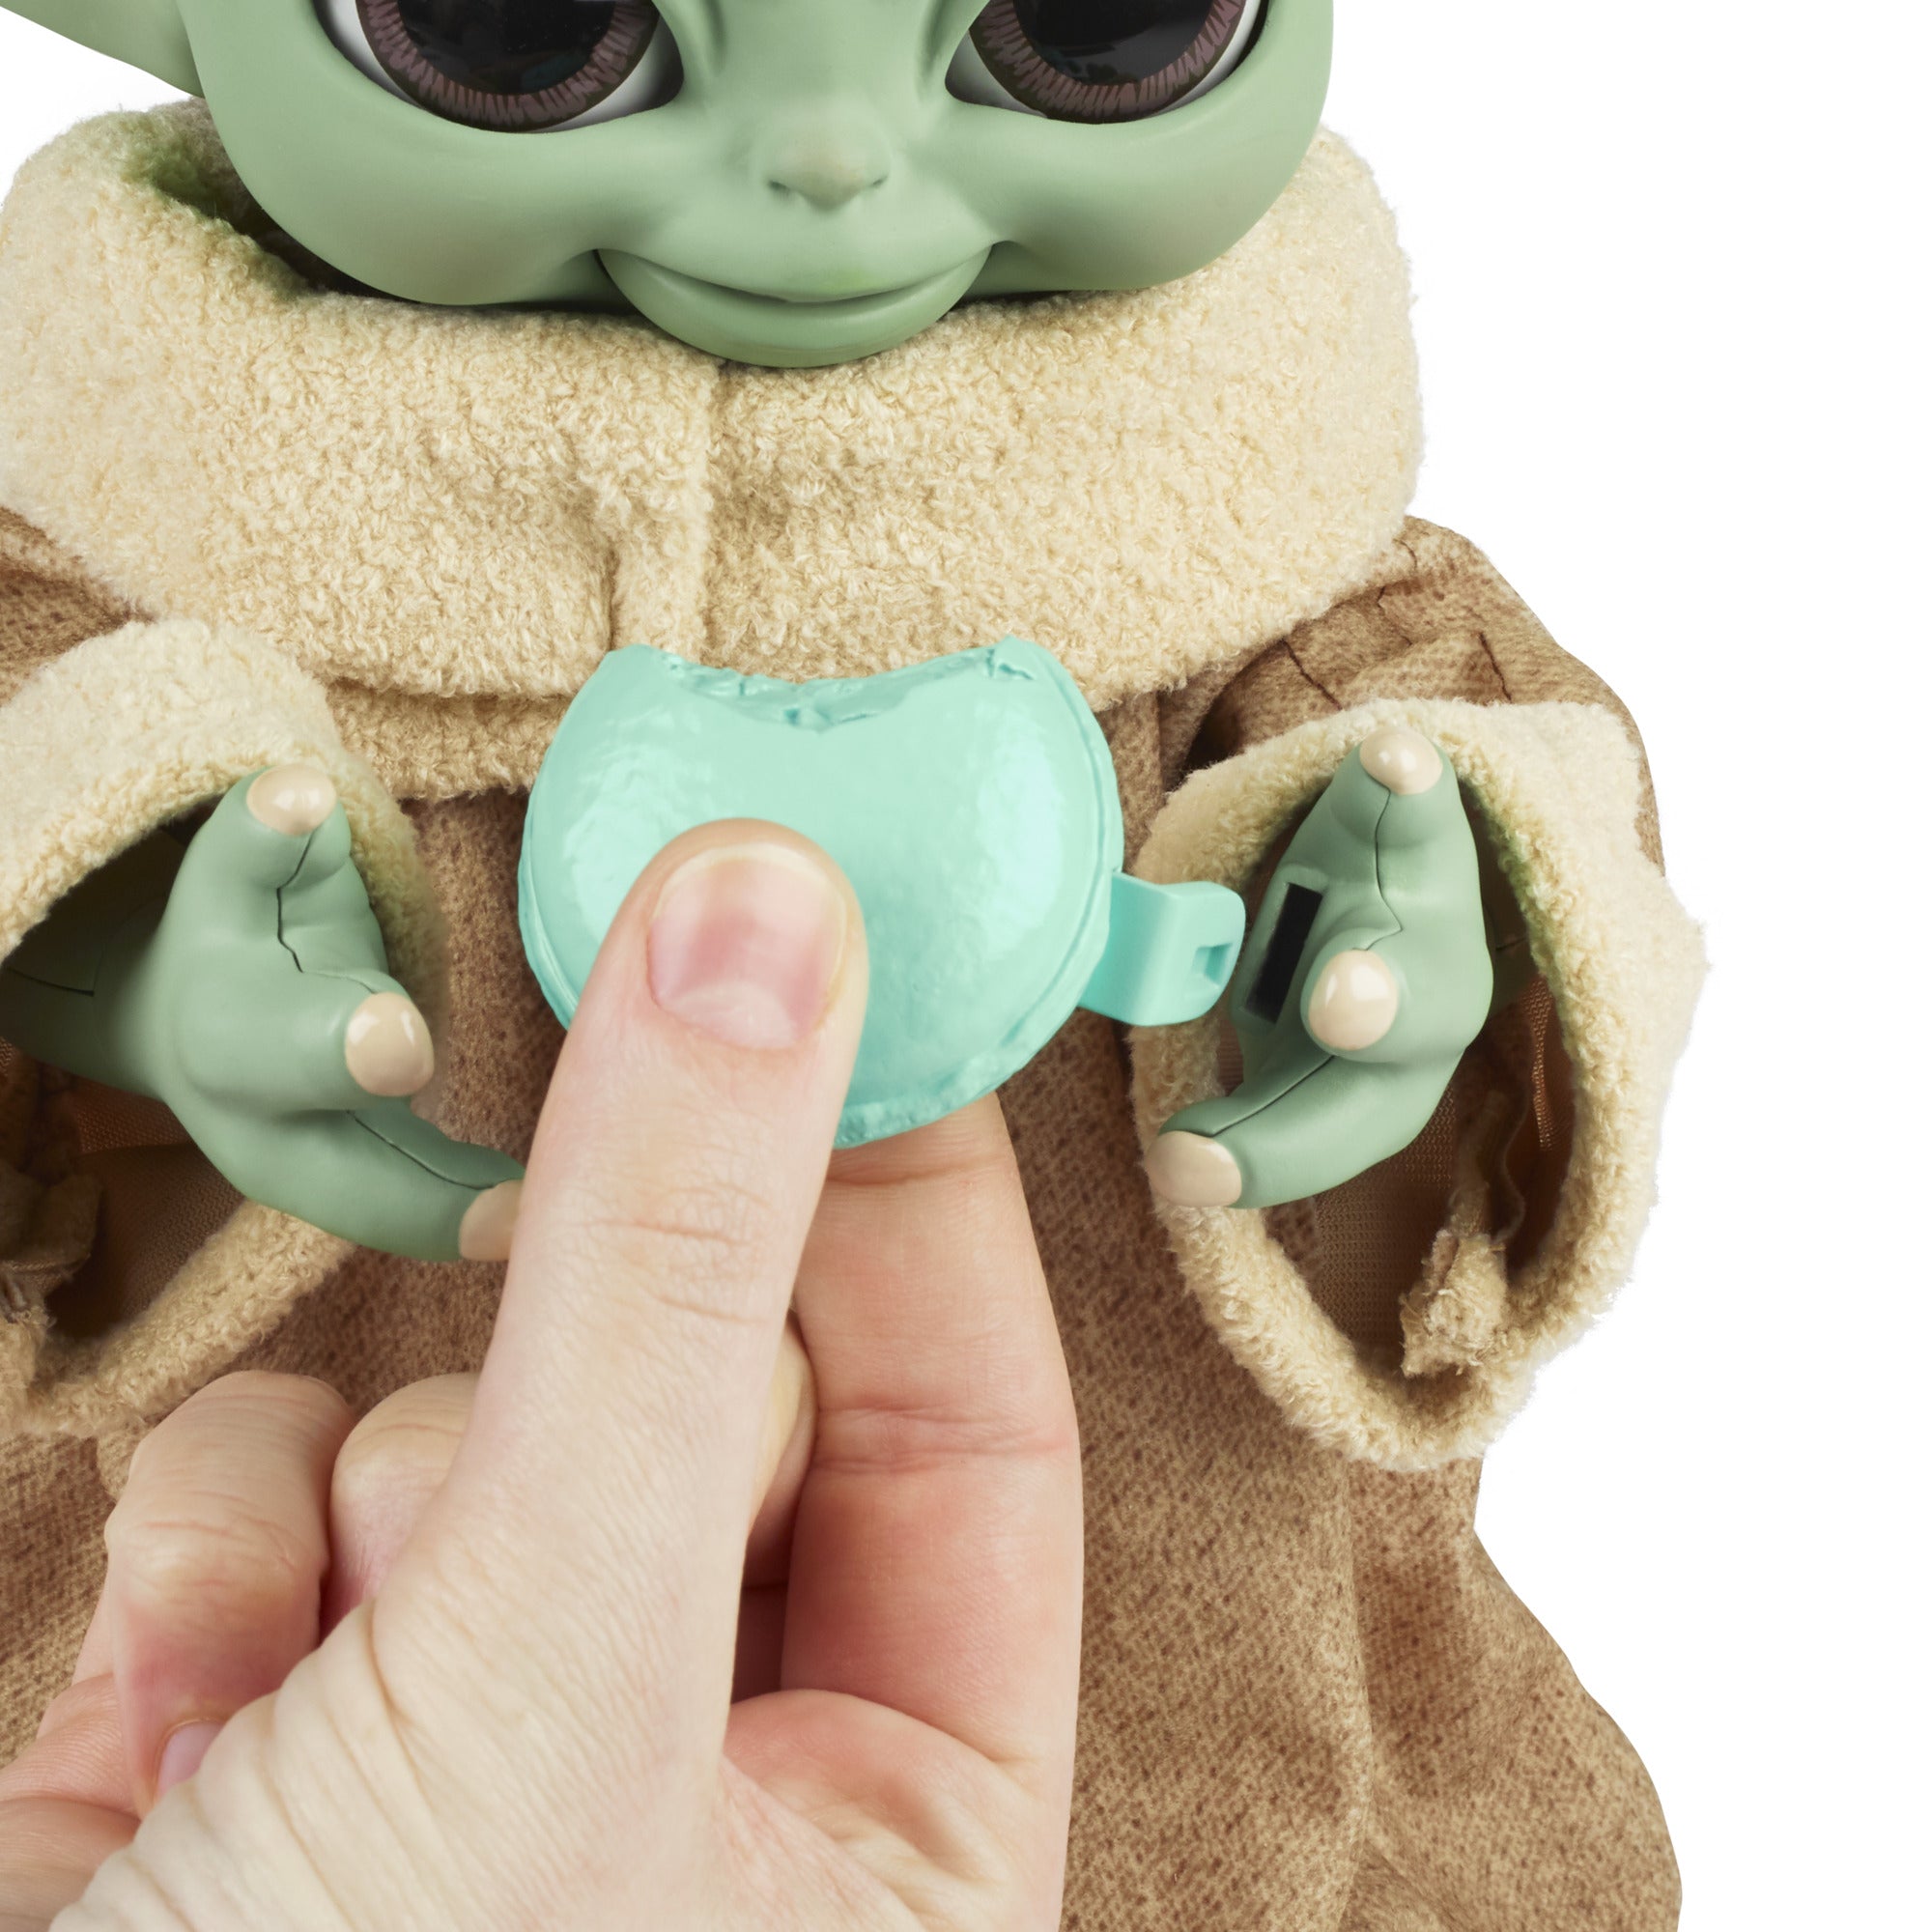 Star Wars: The Mandalorian - Galactic Grogu Baby Yoda Snackin